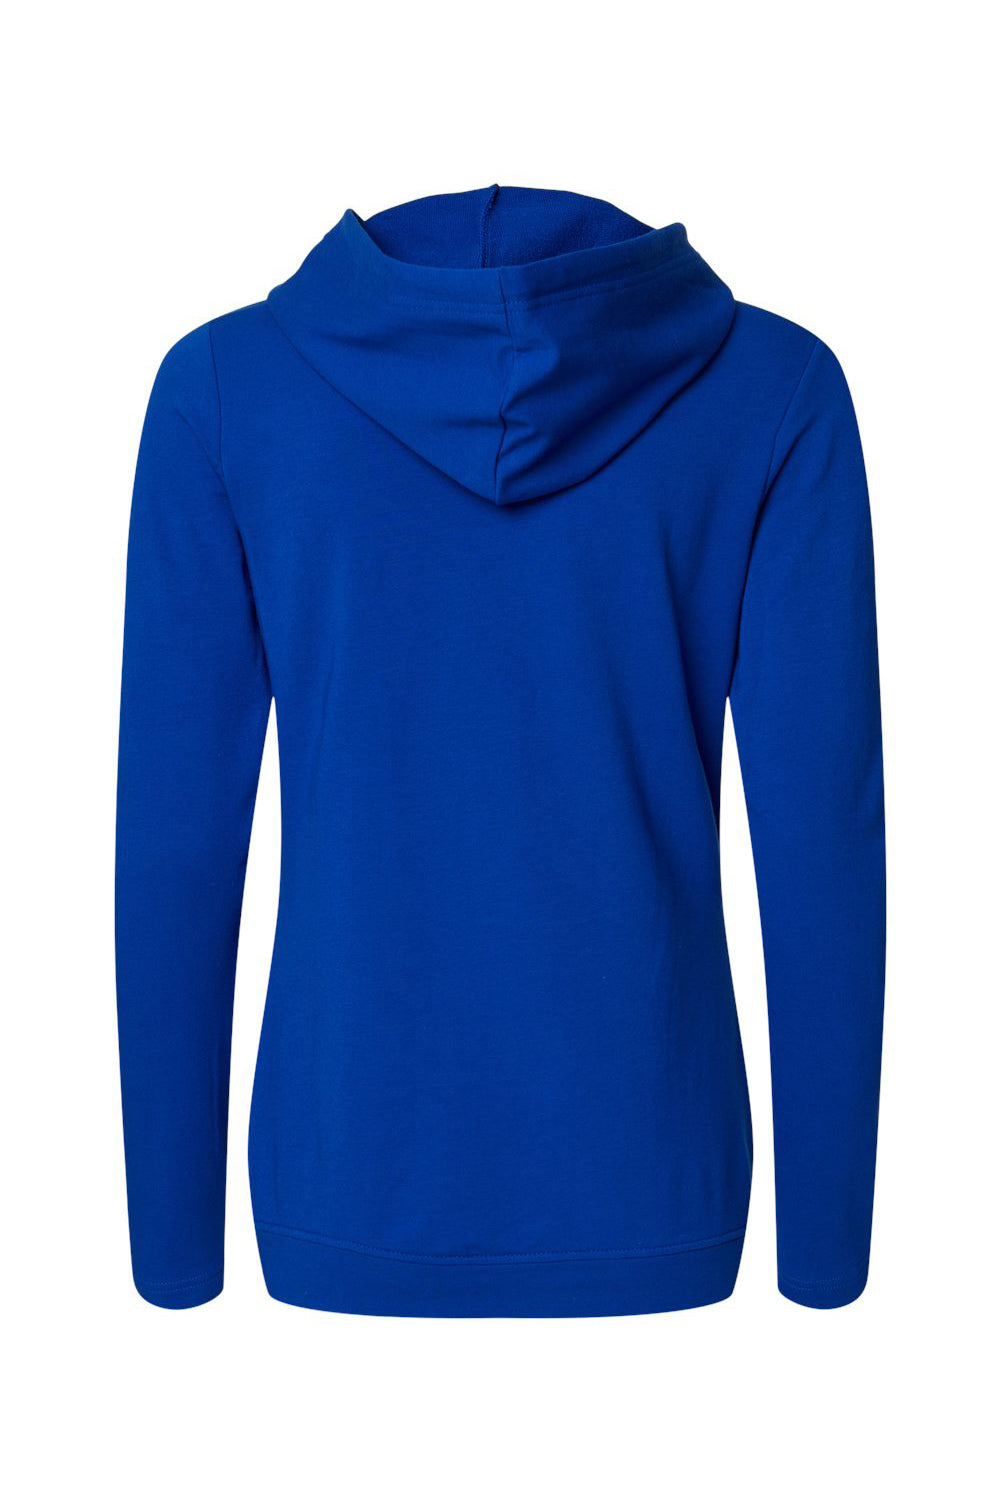 Adidas A451 Womens Hooded Sweatshirt Hoodie Collegiate Royal Blue Flat Back